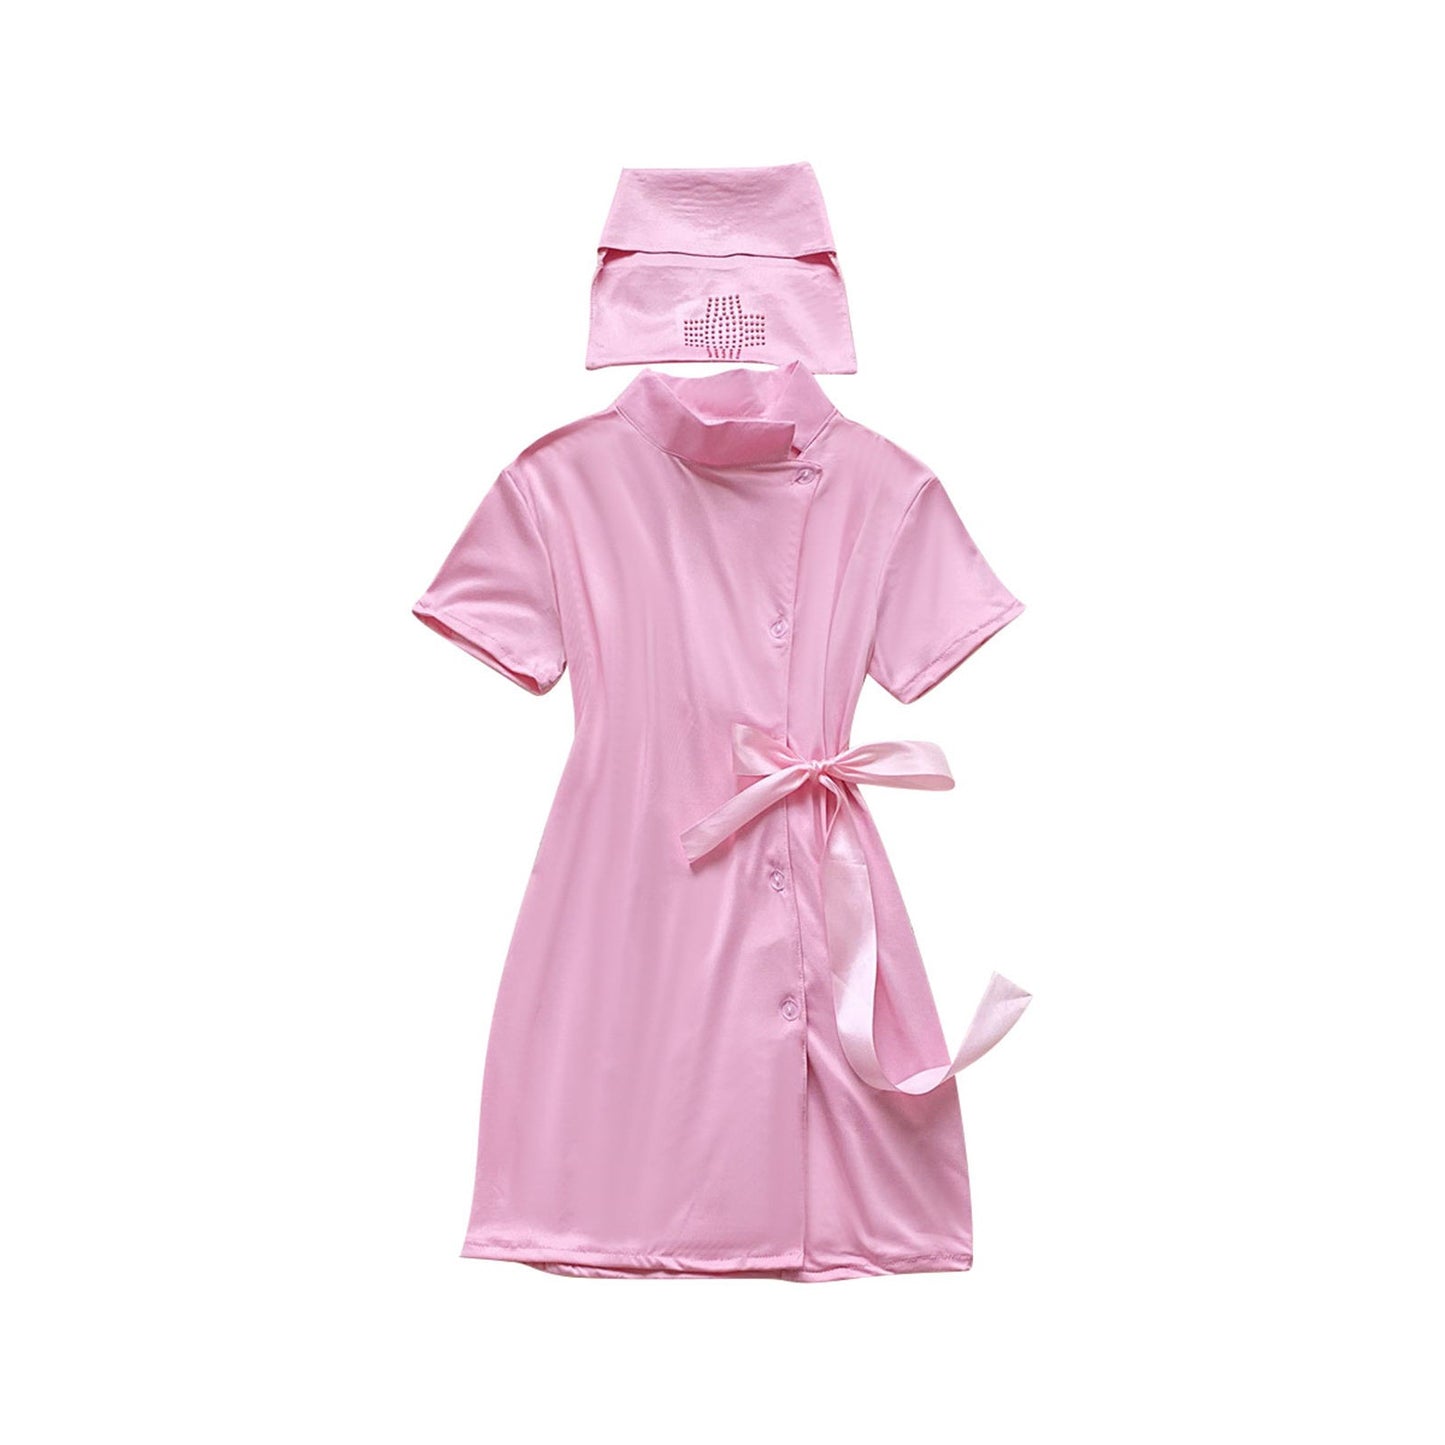 Erotic Sexy Nurse Uniform Roleplay Costume SCD0084